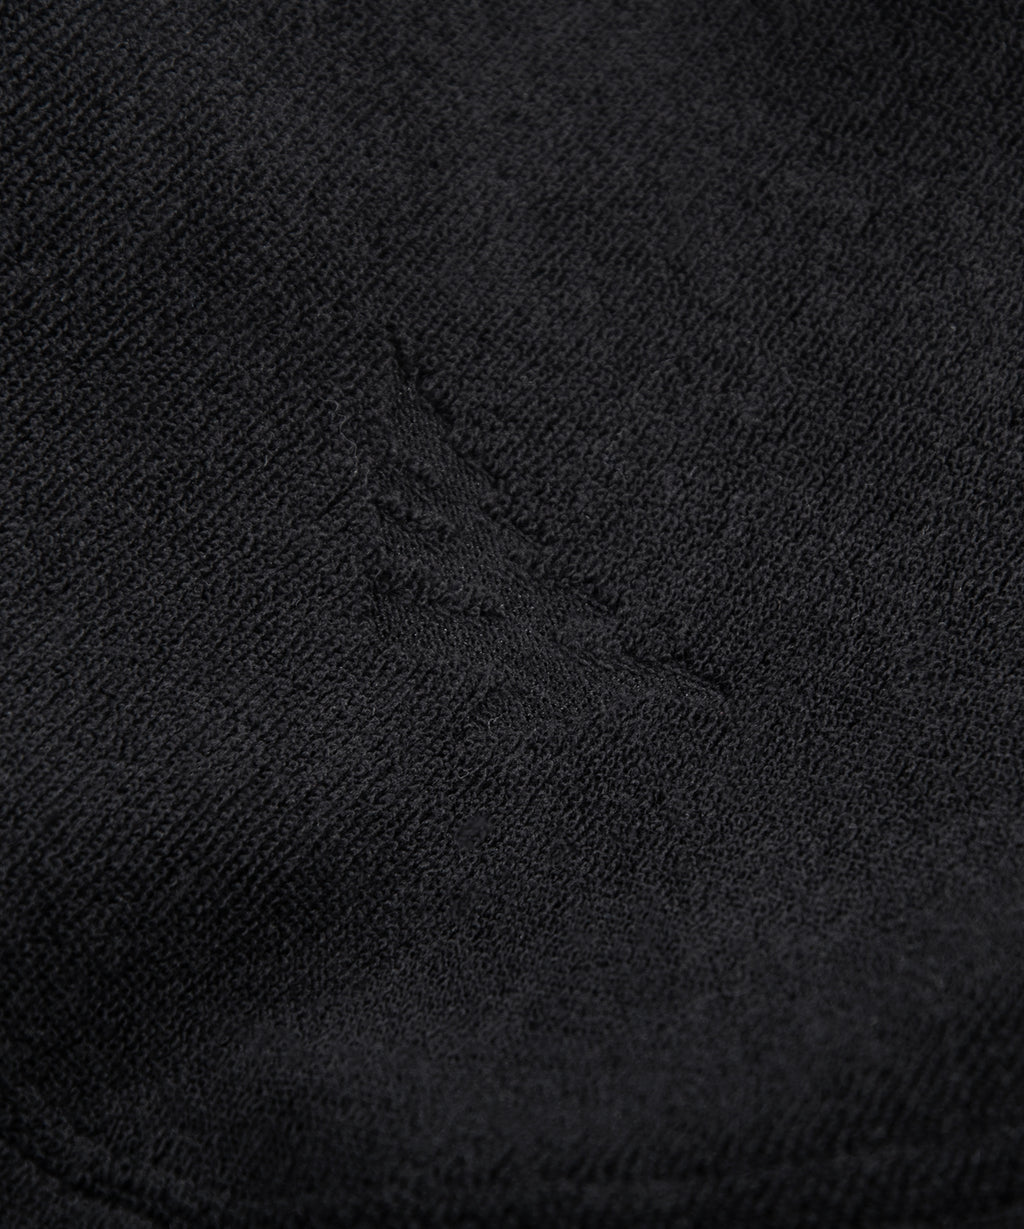  Fabric closeup of Paper Planes Jacquard Terry Cloth Bucket Hat color Black.